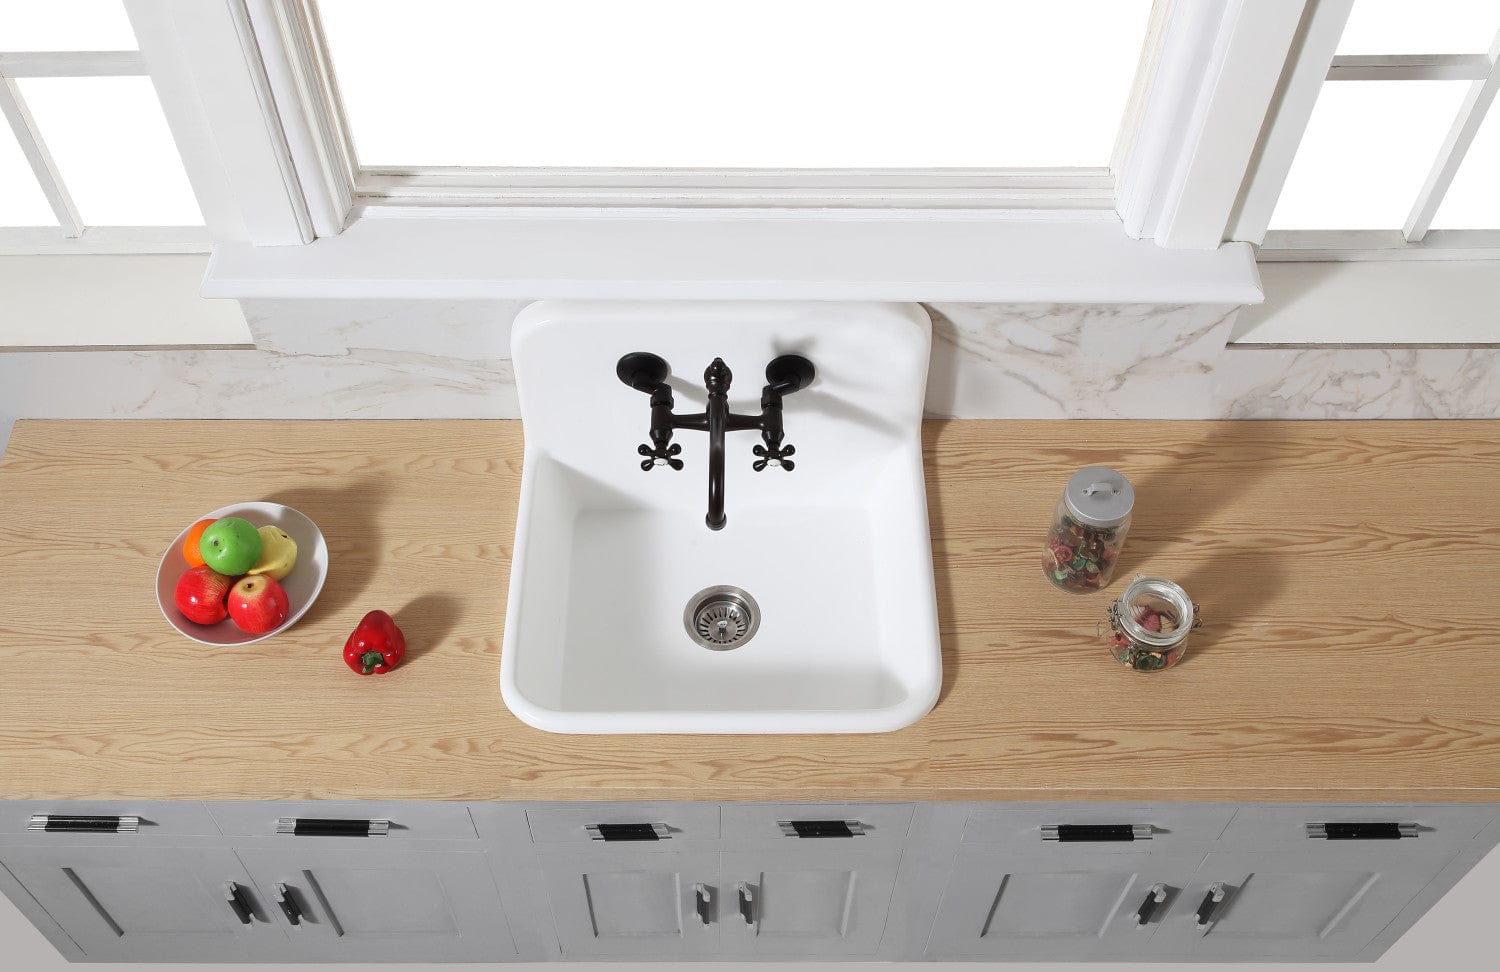 KINGSTON Brass 24" Solid Surface Kitchen Sink with Backsplash - Matte White